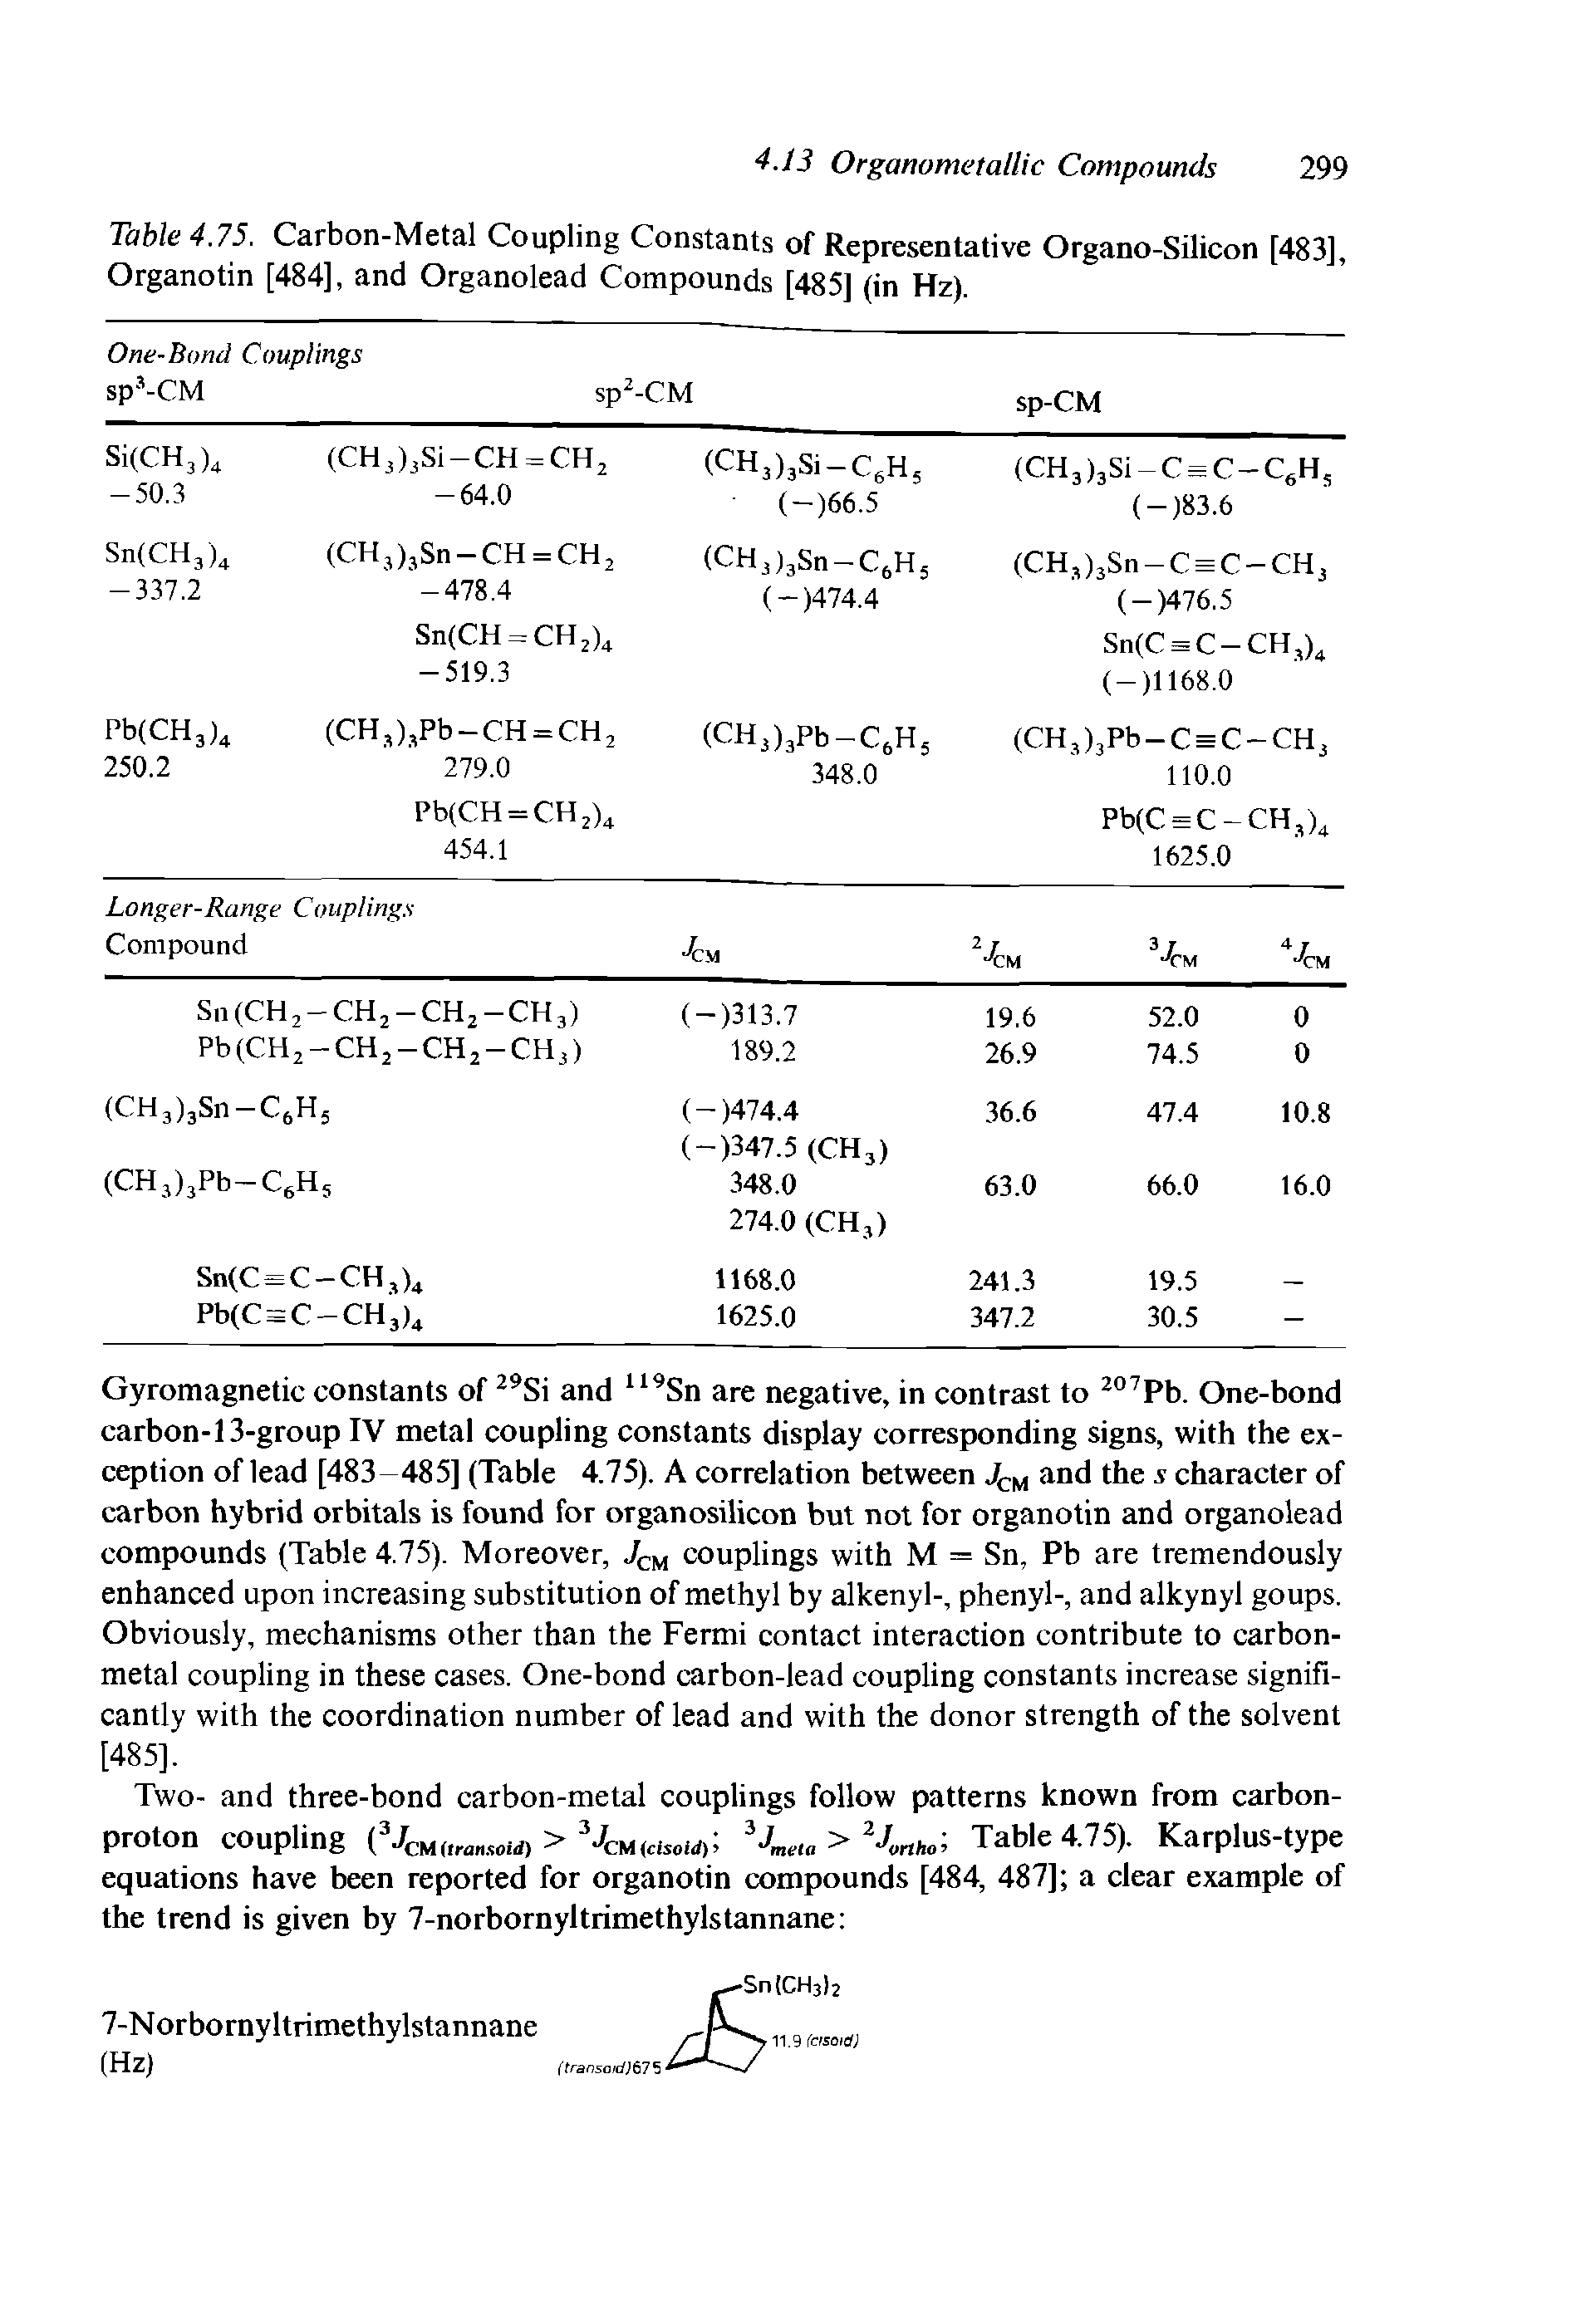 Table 4.75. Carbon-Metal Coupling Constants of Representative Organo-Silicon [483], Organotin [484], and Organolead Compounds [485] (in Hz).